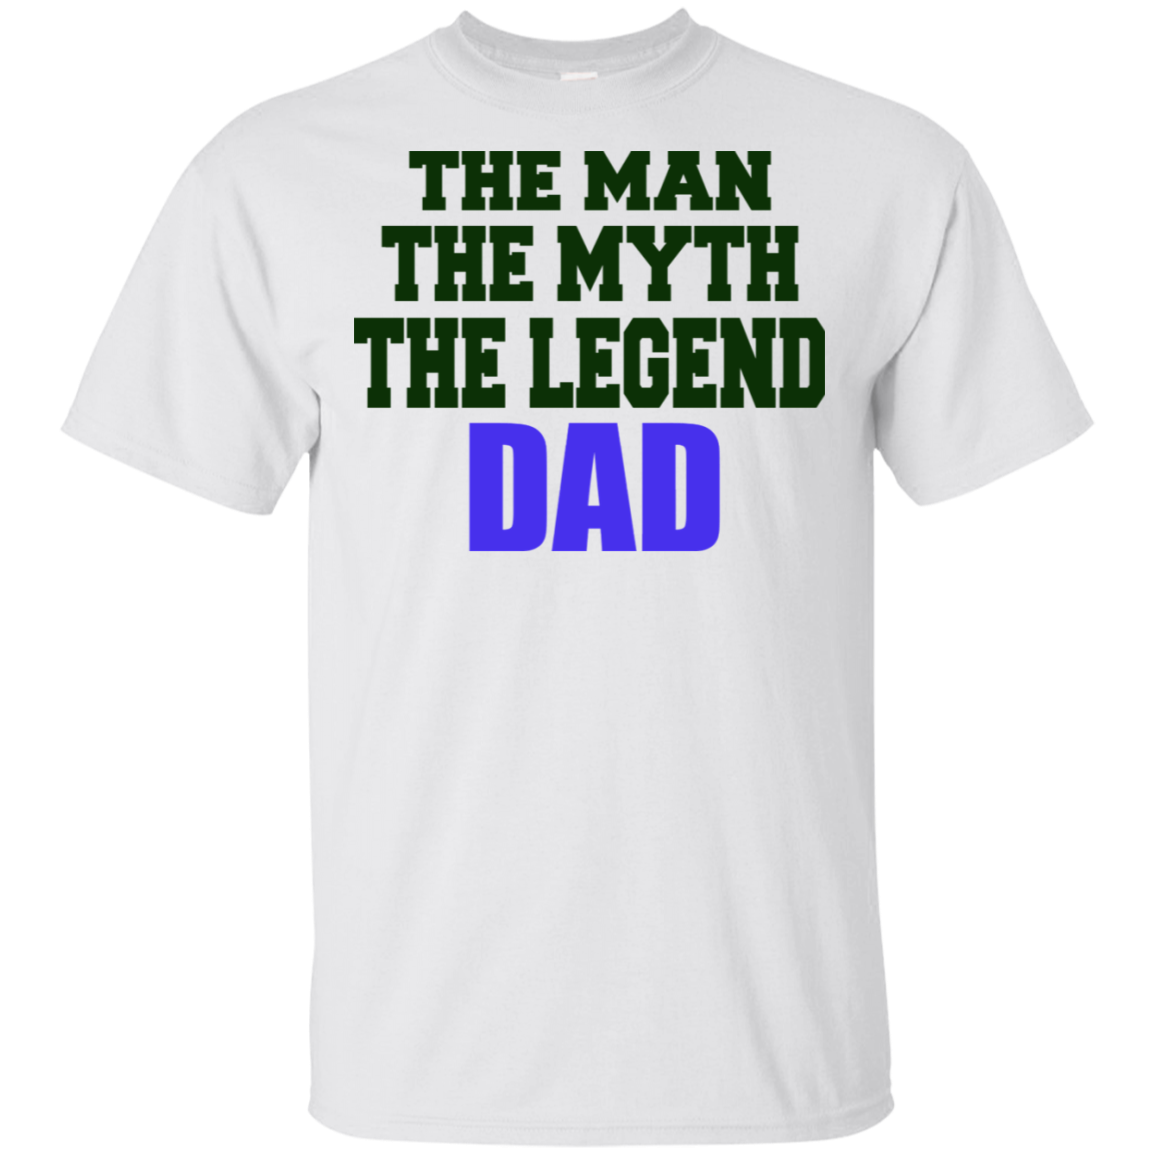 The Man, The Myth, The Legend